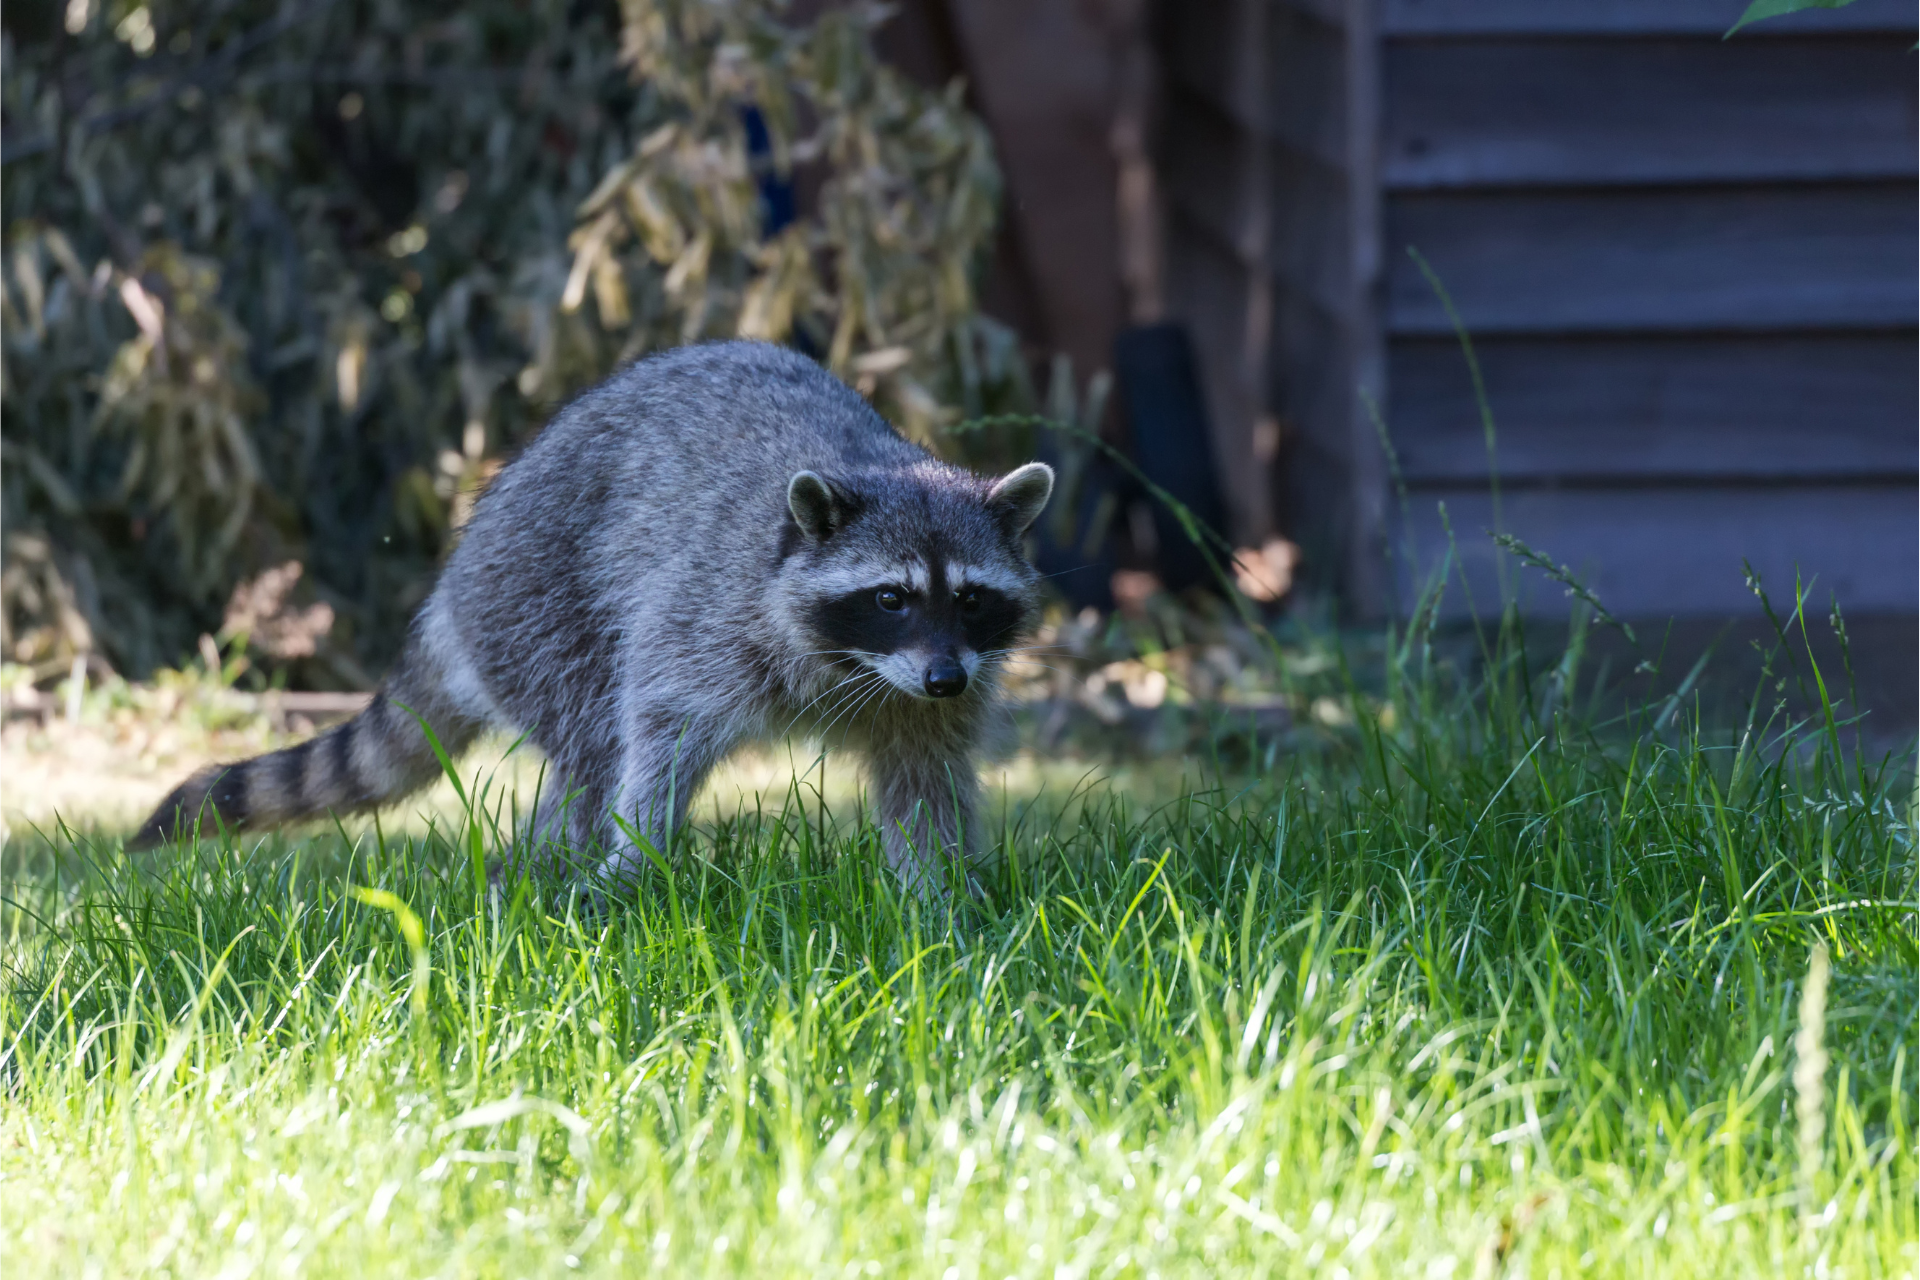 A raccoon is walking through the grass in a yard.